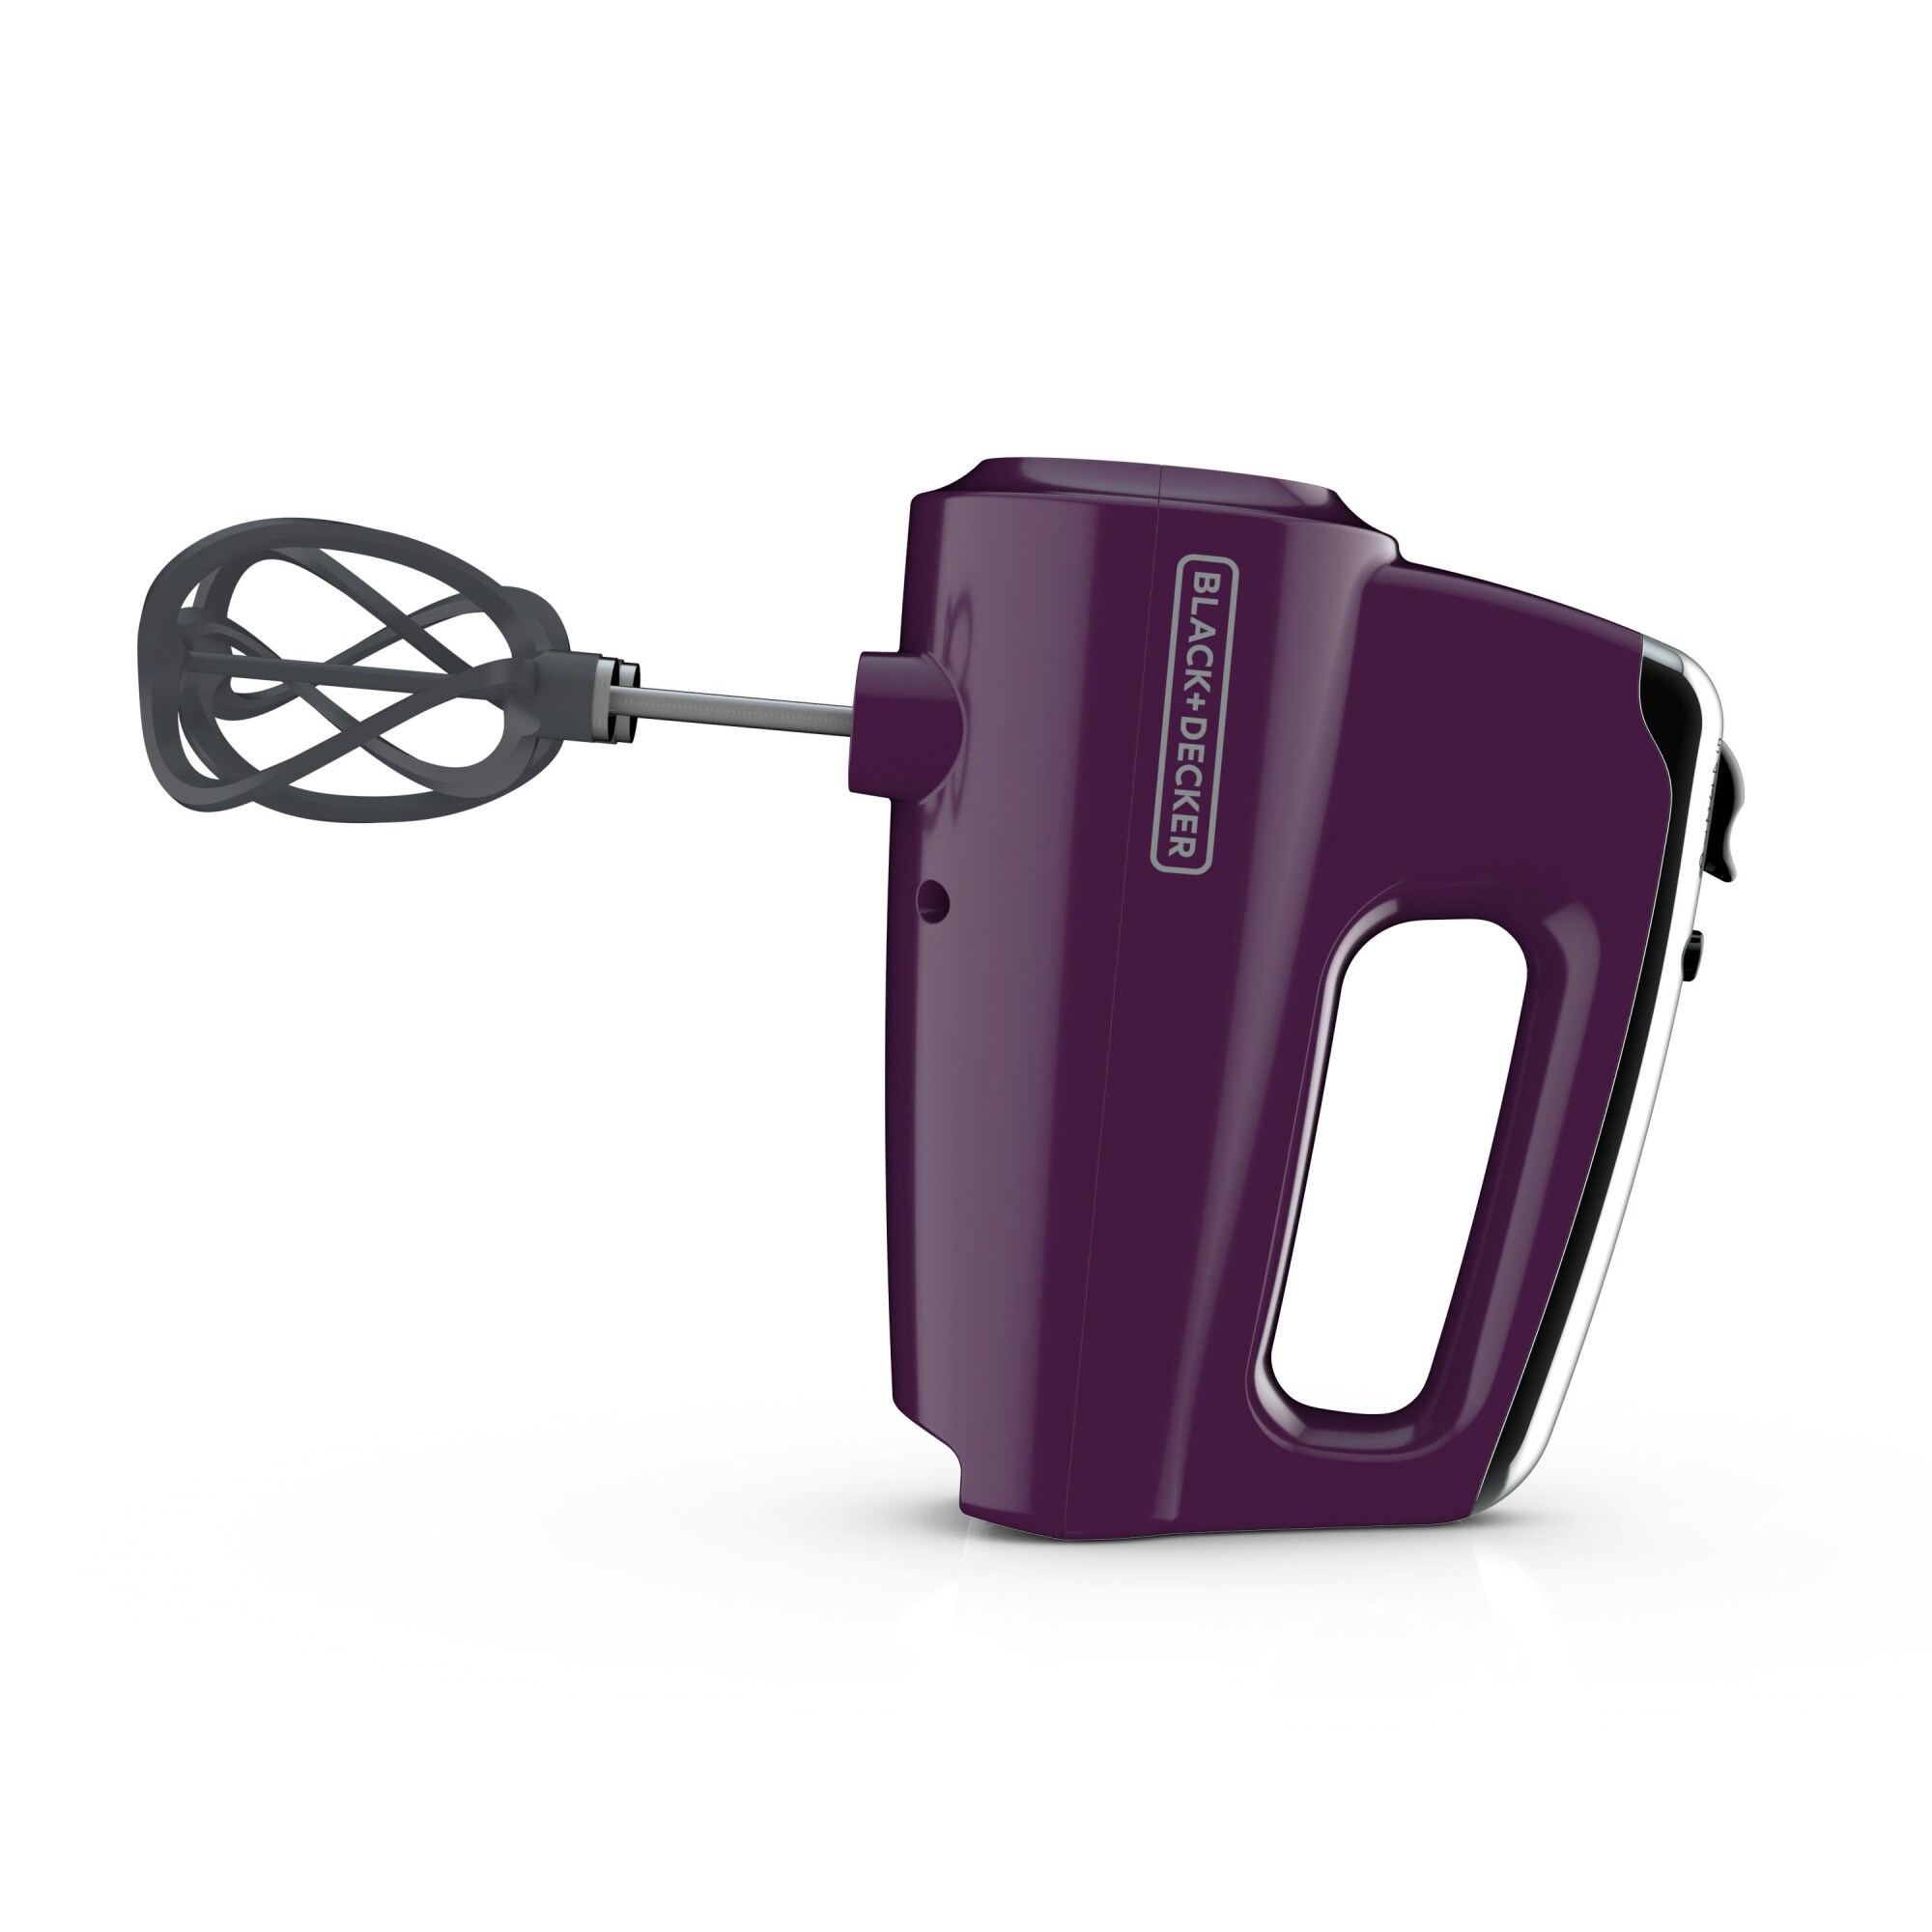 Black & Decker Helix Performance Premium 5-Speed Hand Mixer, Purple